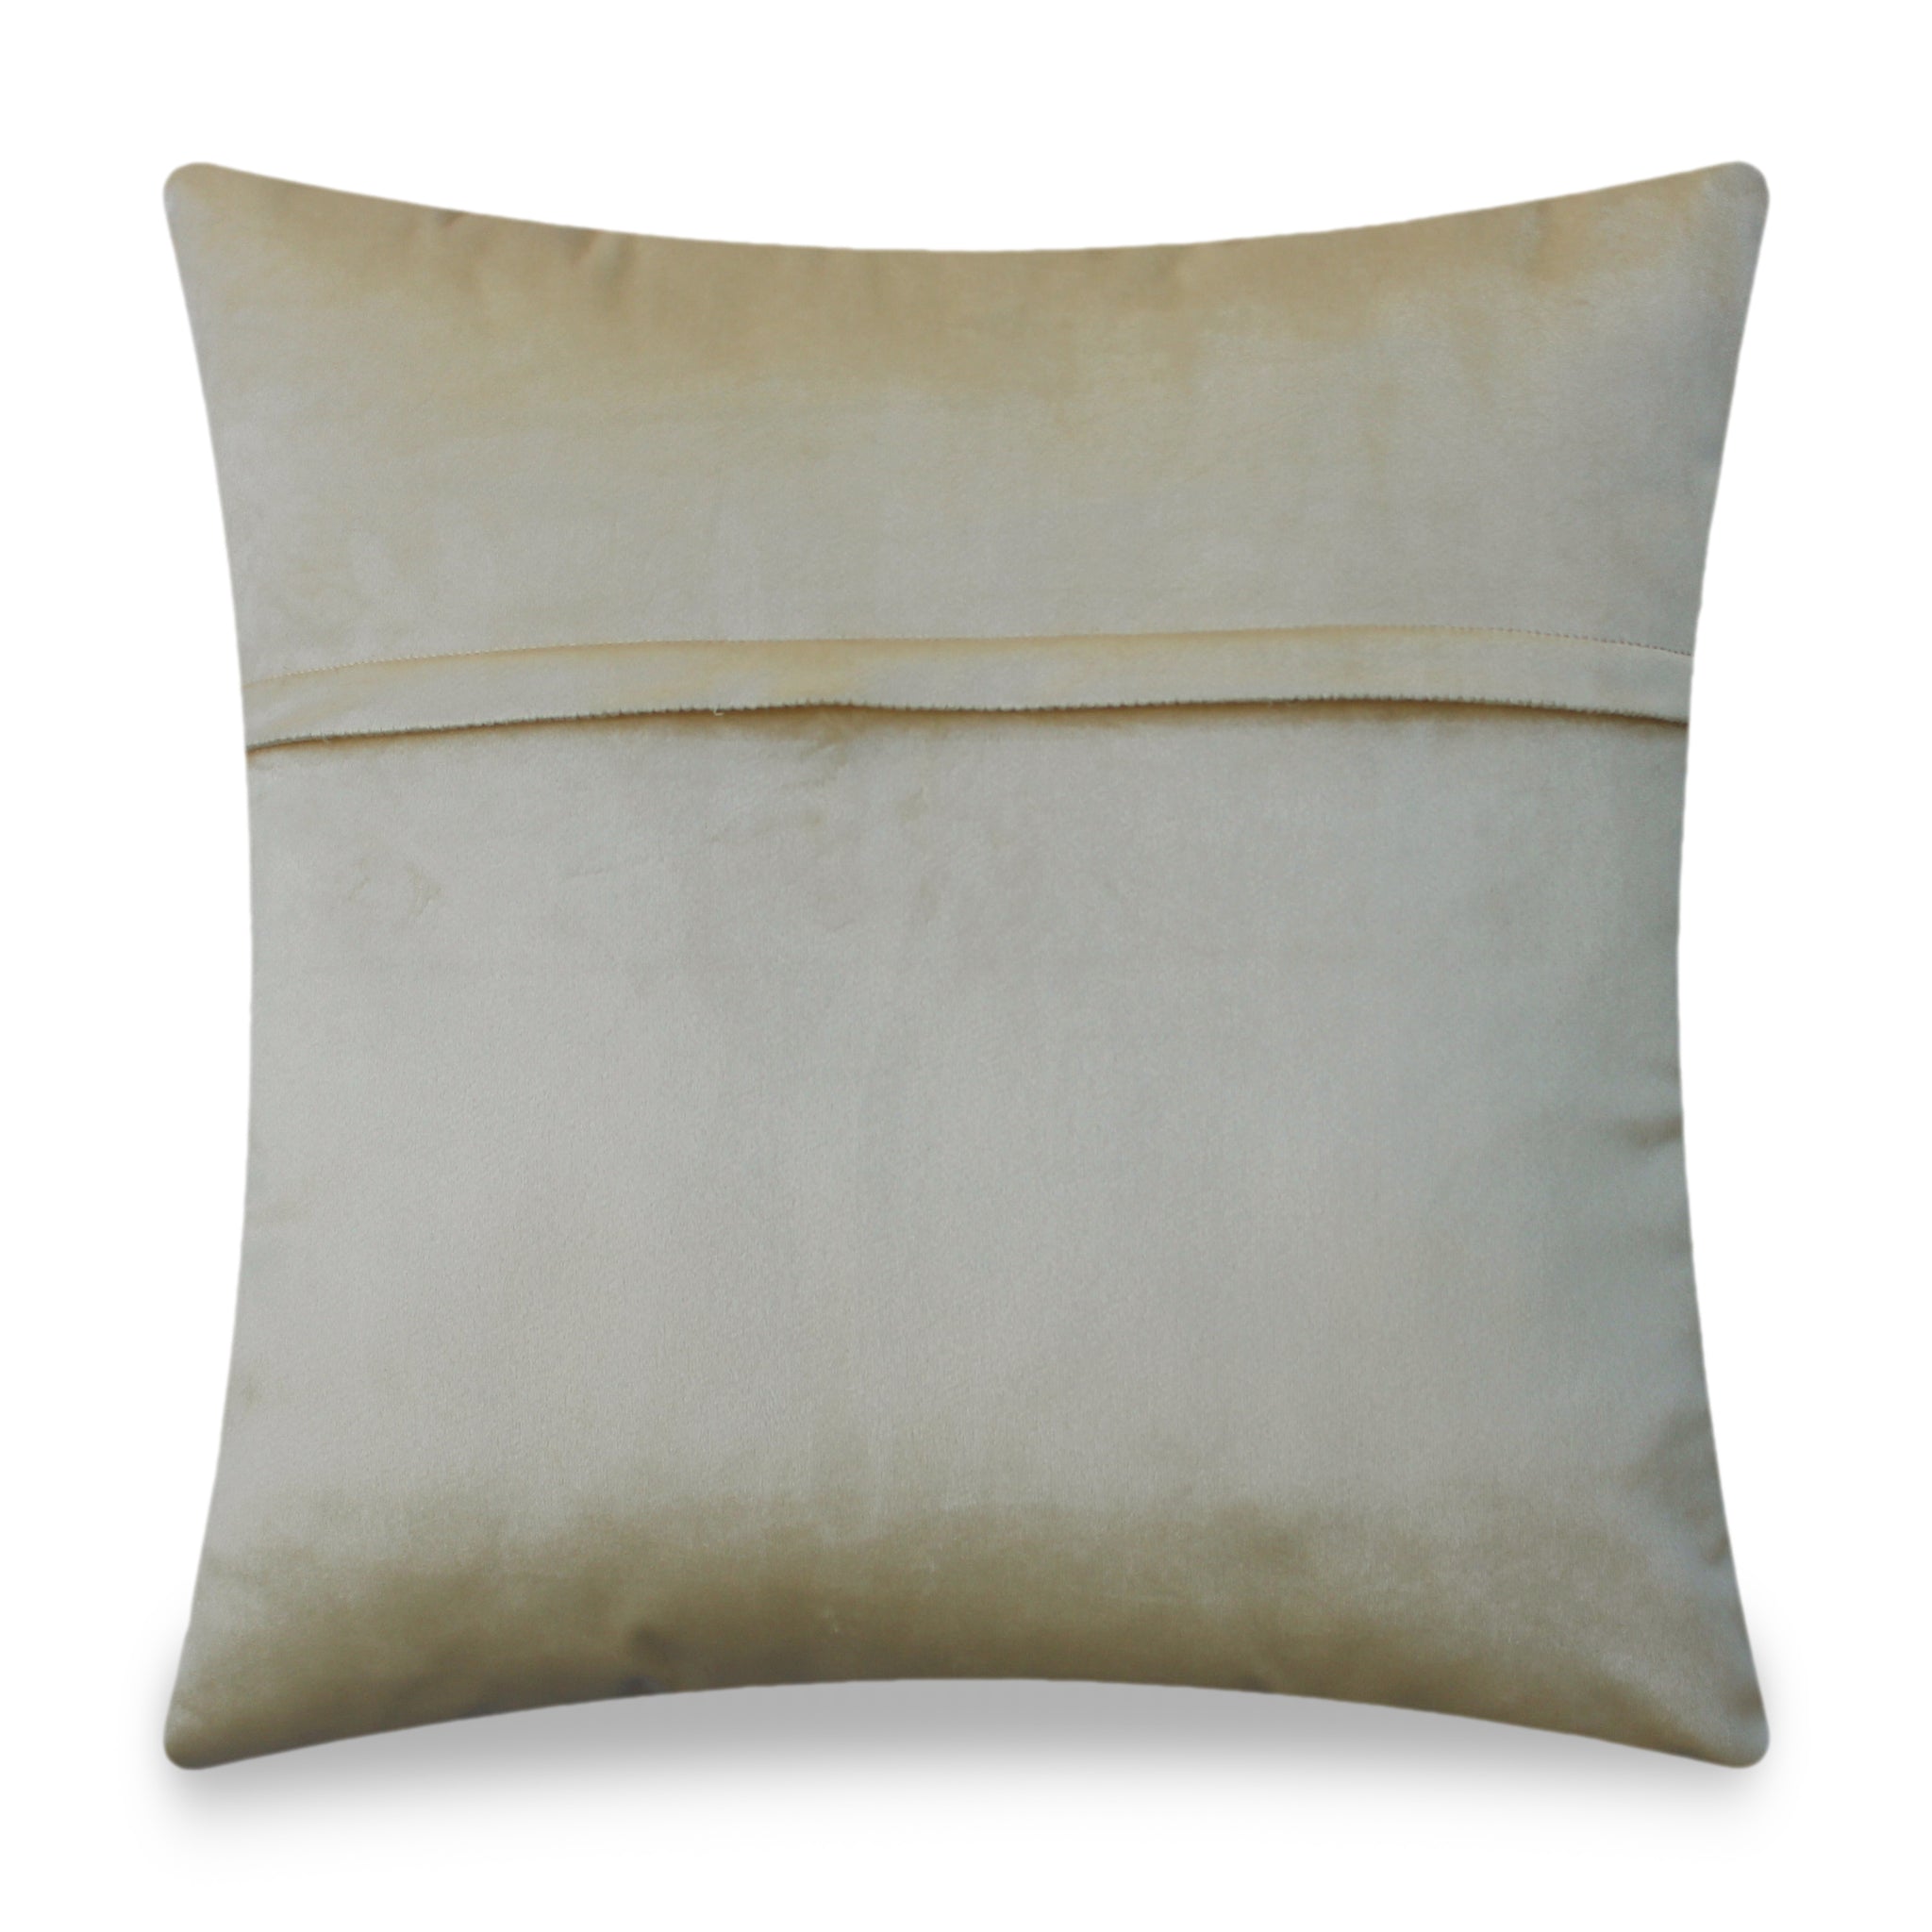 Orange Velvet Cushion Cover, Hermes Inspired Horse Printed Decorative Pillow, Vintage Home Décor Throw Pillow Cover,  45 x 45 CM